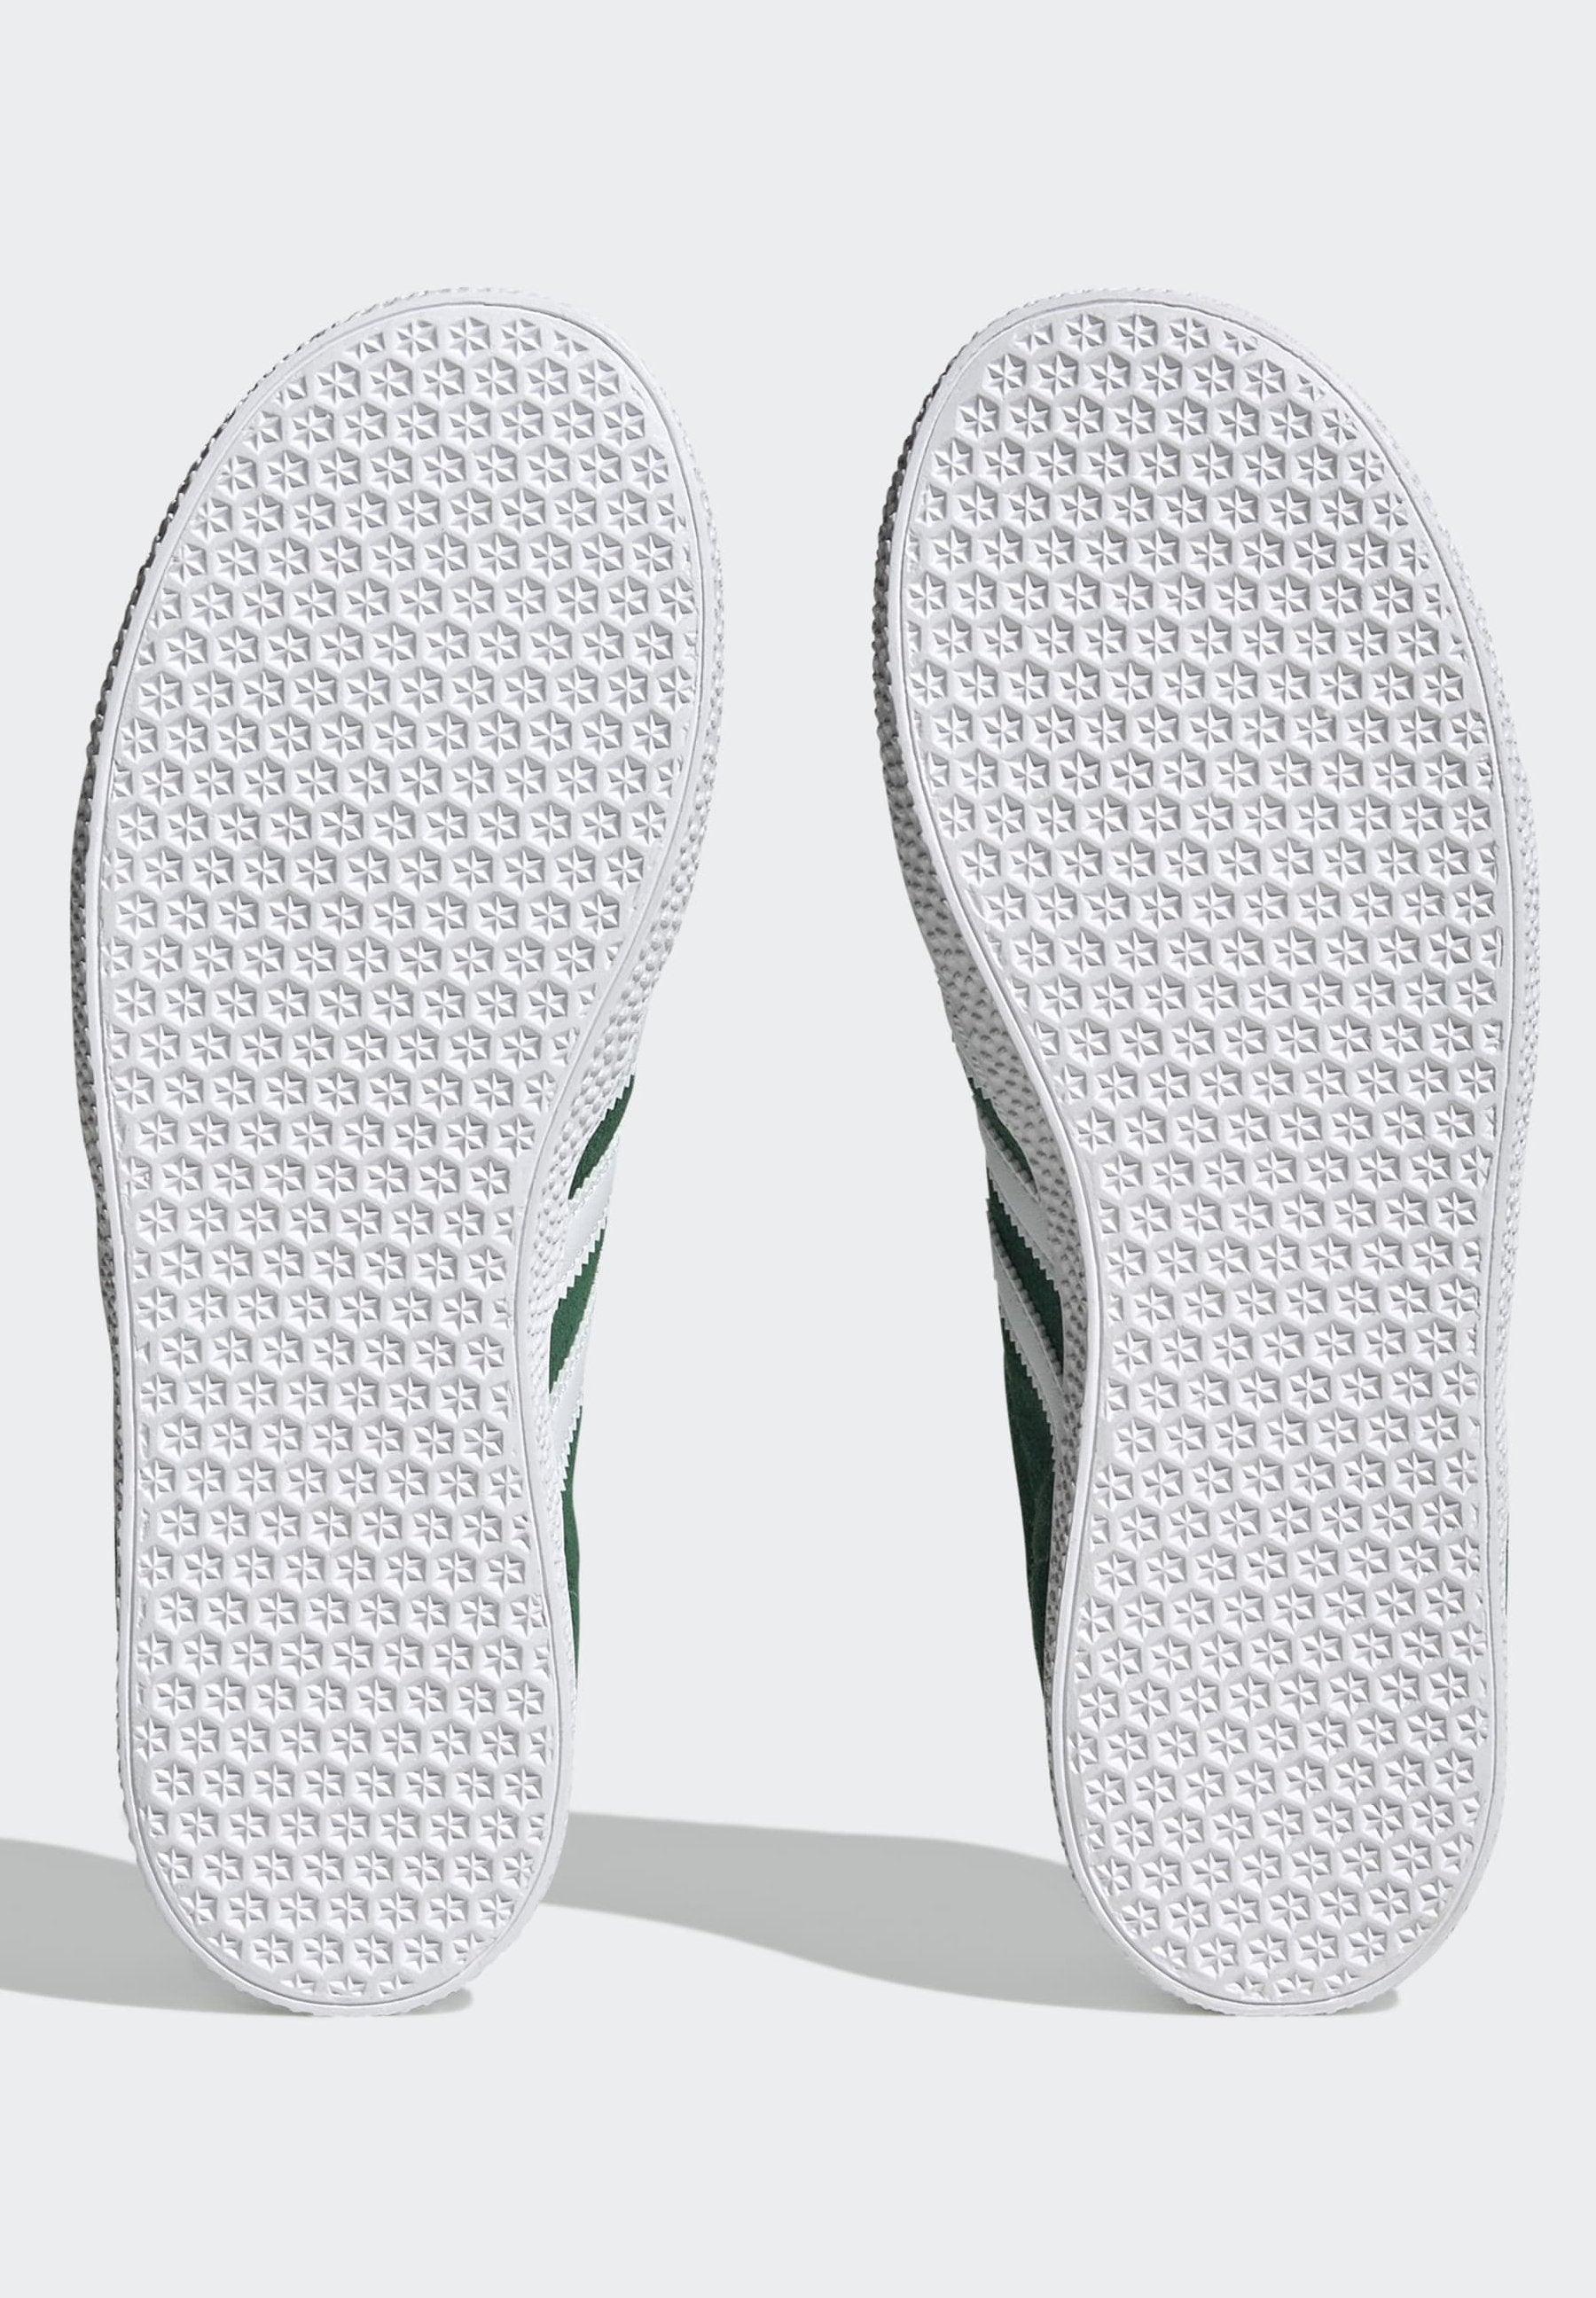 Adidas Gazelle Green - Plumas Kicks